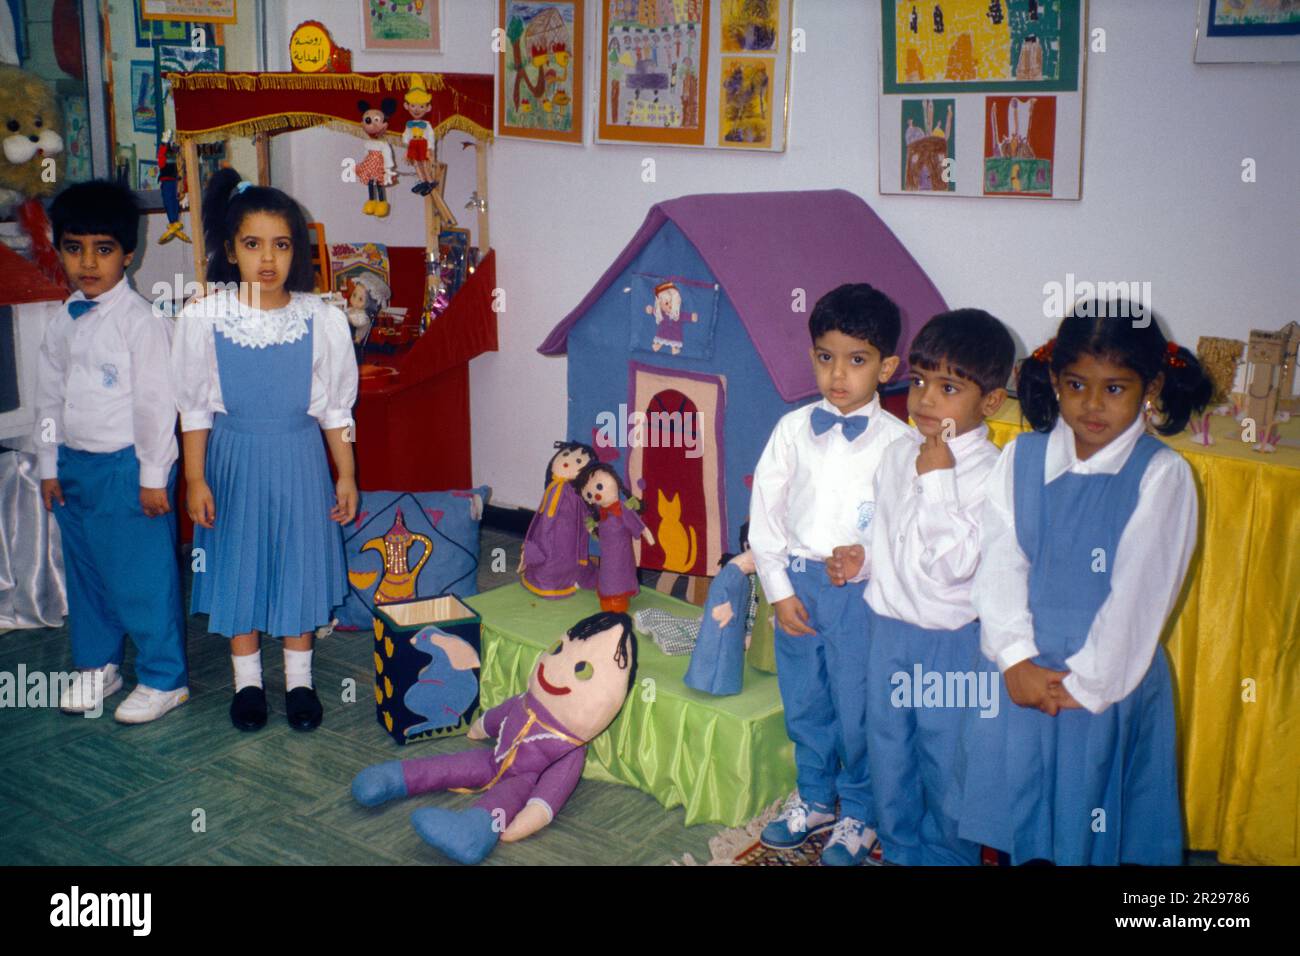 Abu Dhabi UAE Kindergarten Mixed Childrens Class Boy And Girl In School Uniform by Toys Stock Photo